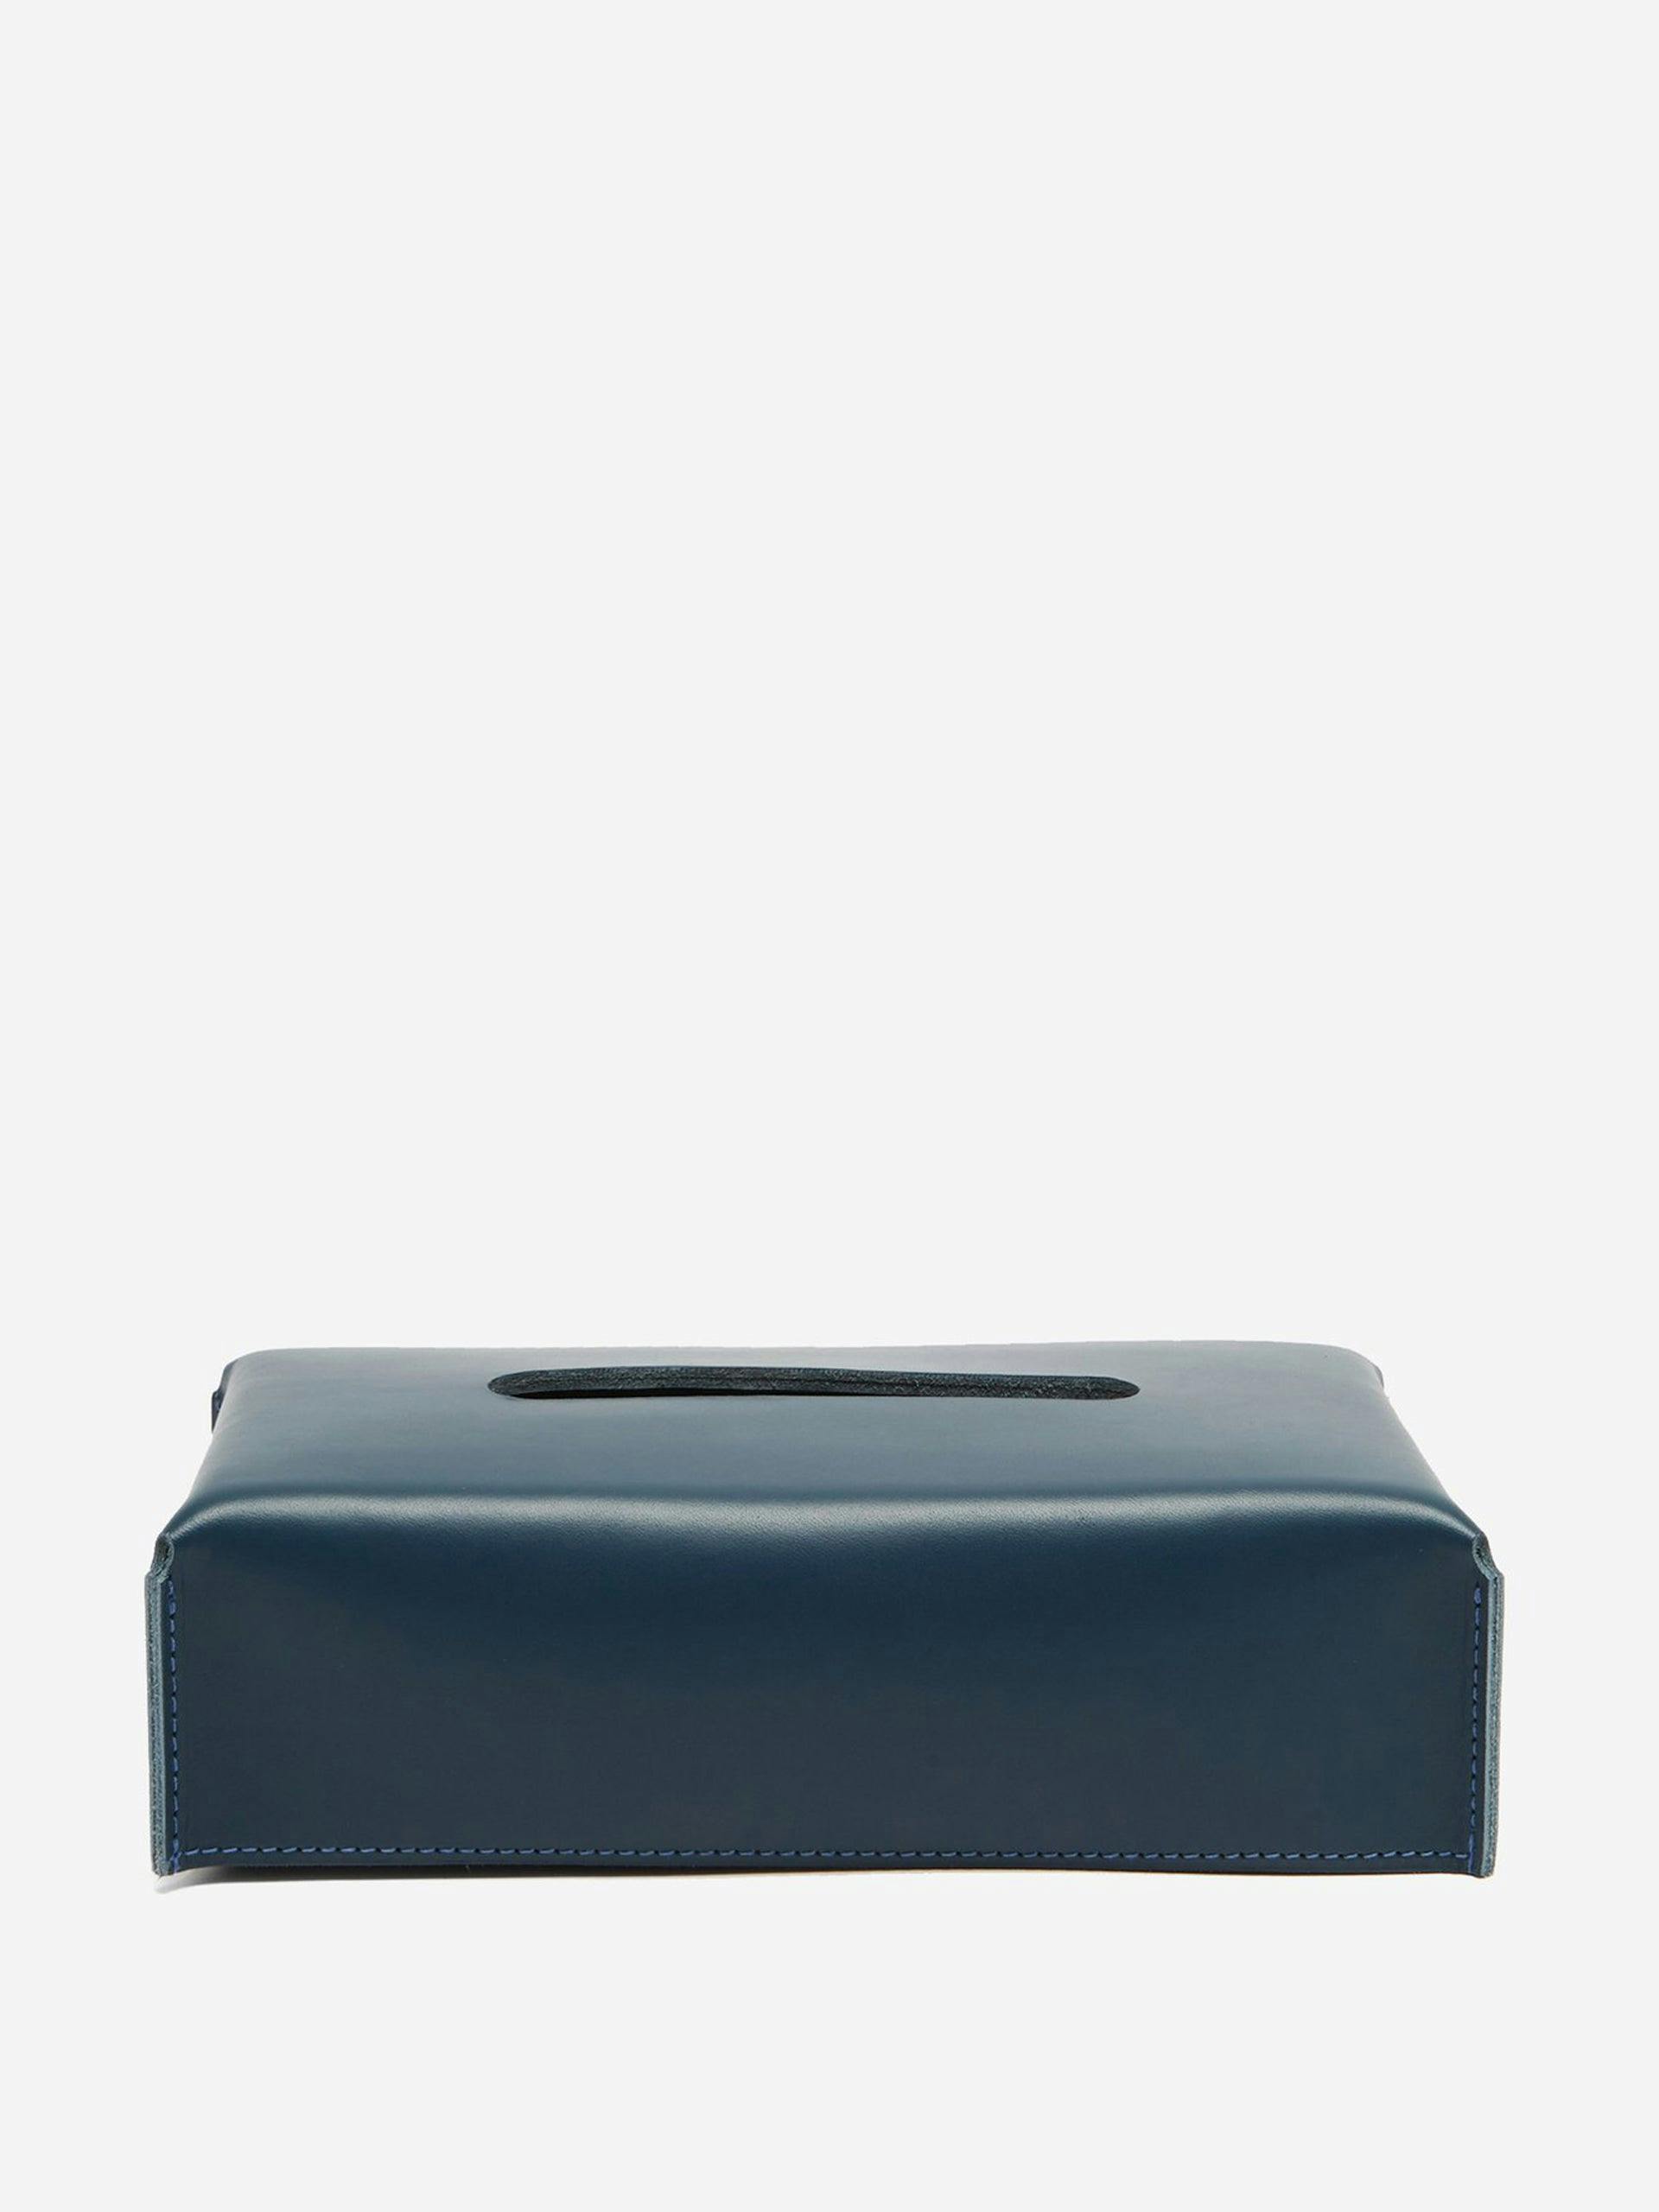 Amsterdam leather tissue box